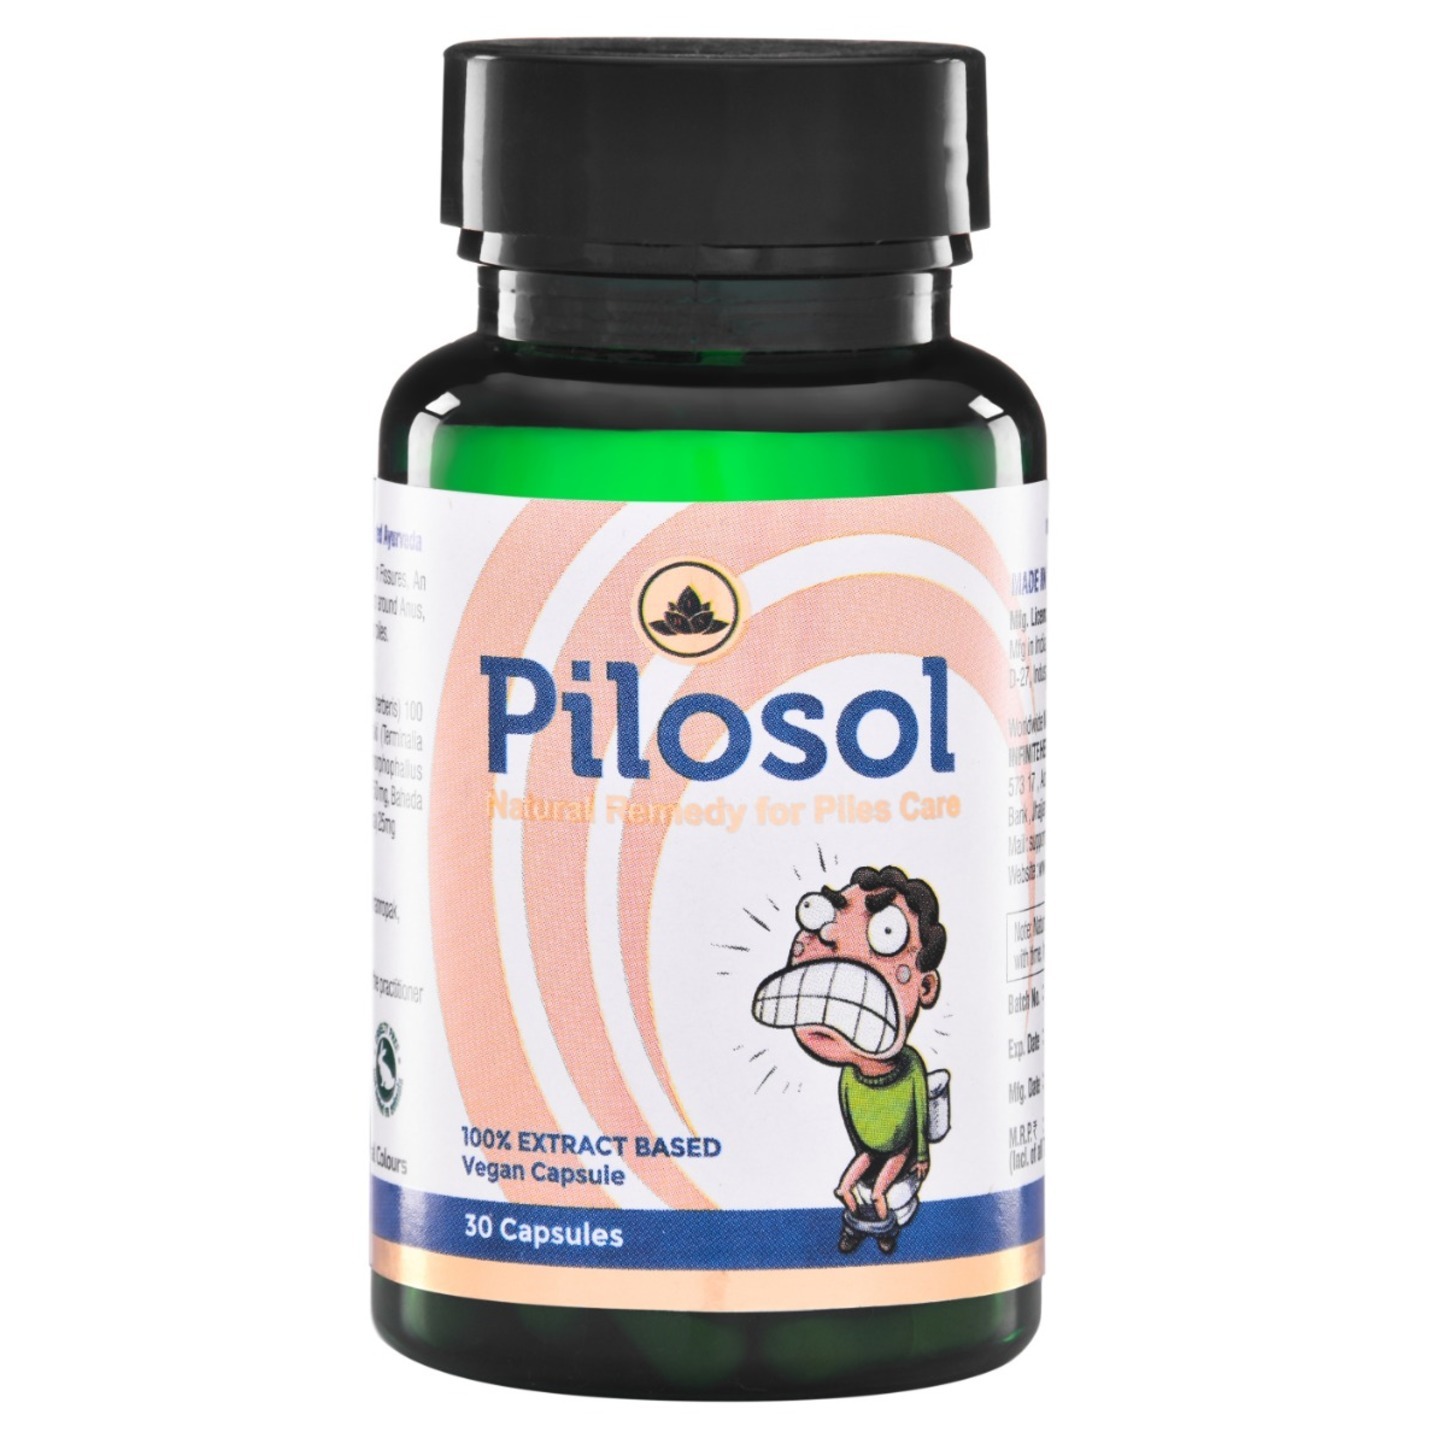 Pilosol - Solution for piles